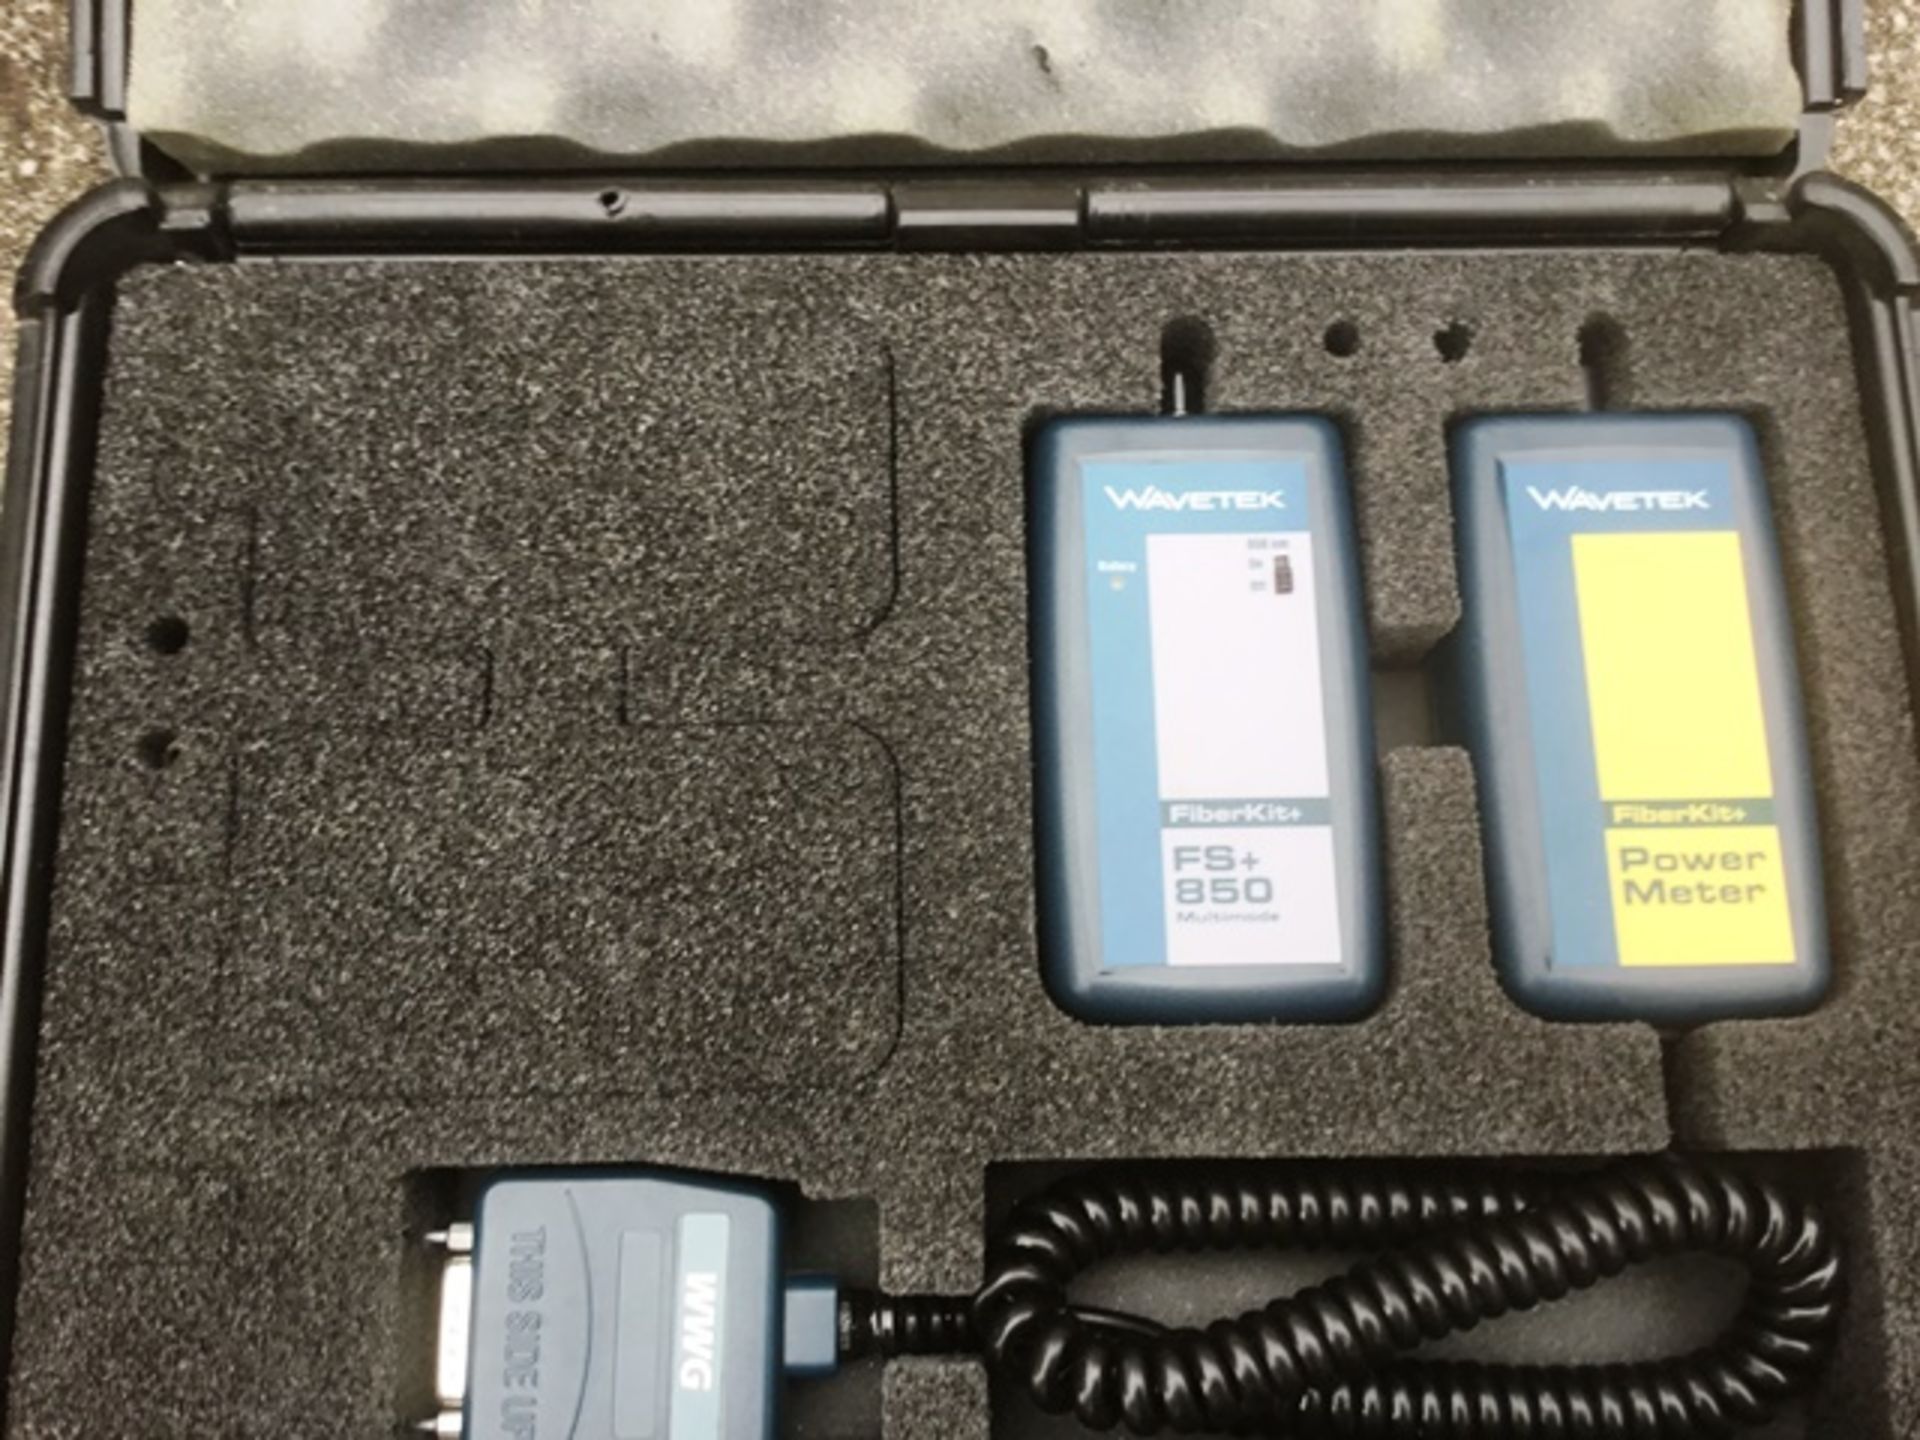 Wavetek Fibrekit Plus with FS+850 multimode and Fibrekit Power meter, with carry case (year of - Image 3 of 3